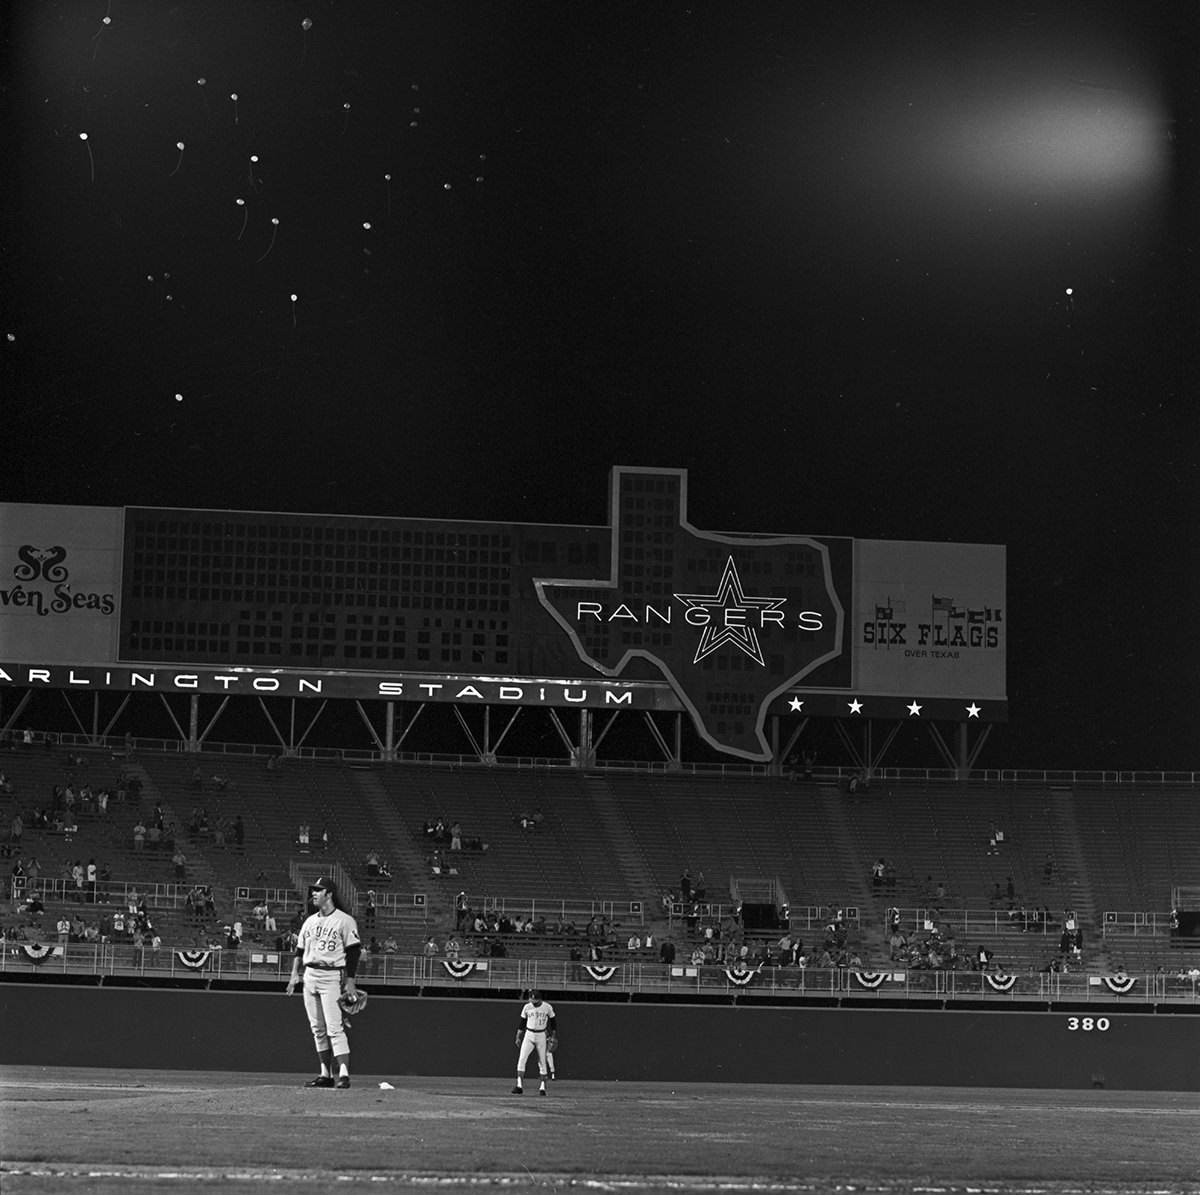 Texas Rangers vs. California Angels baseball game at Arlington Stadium, April 1972.